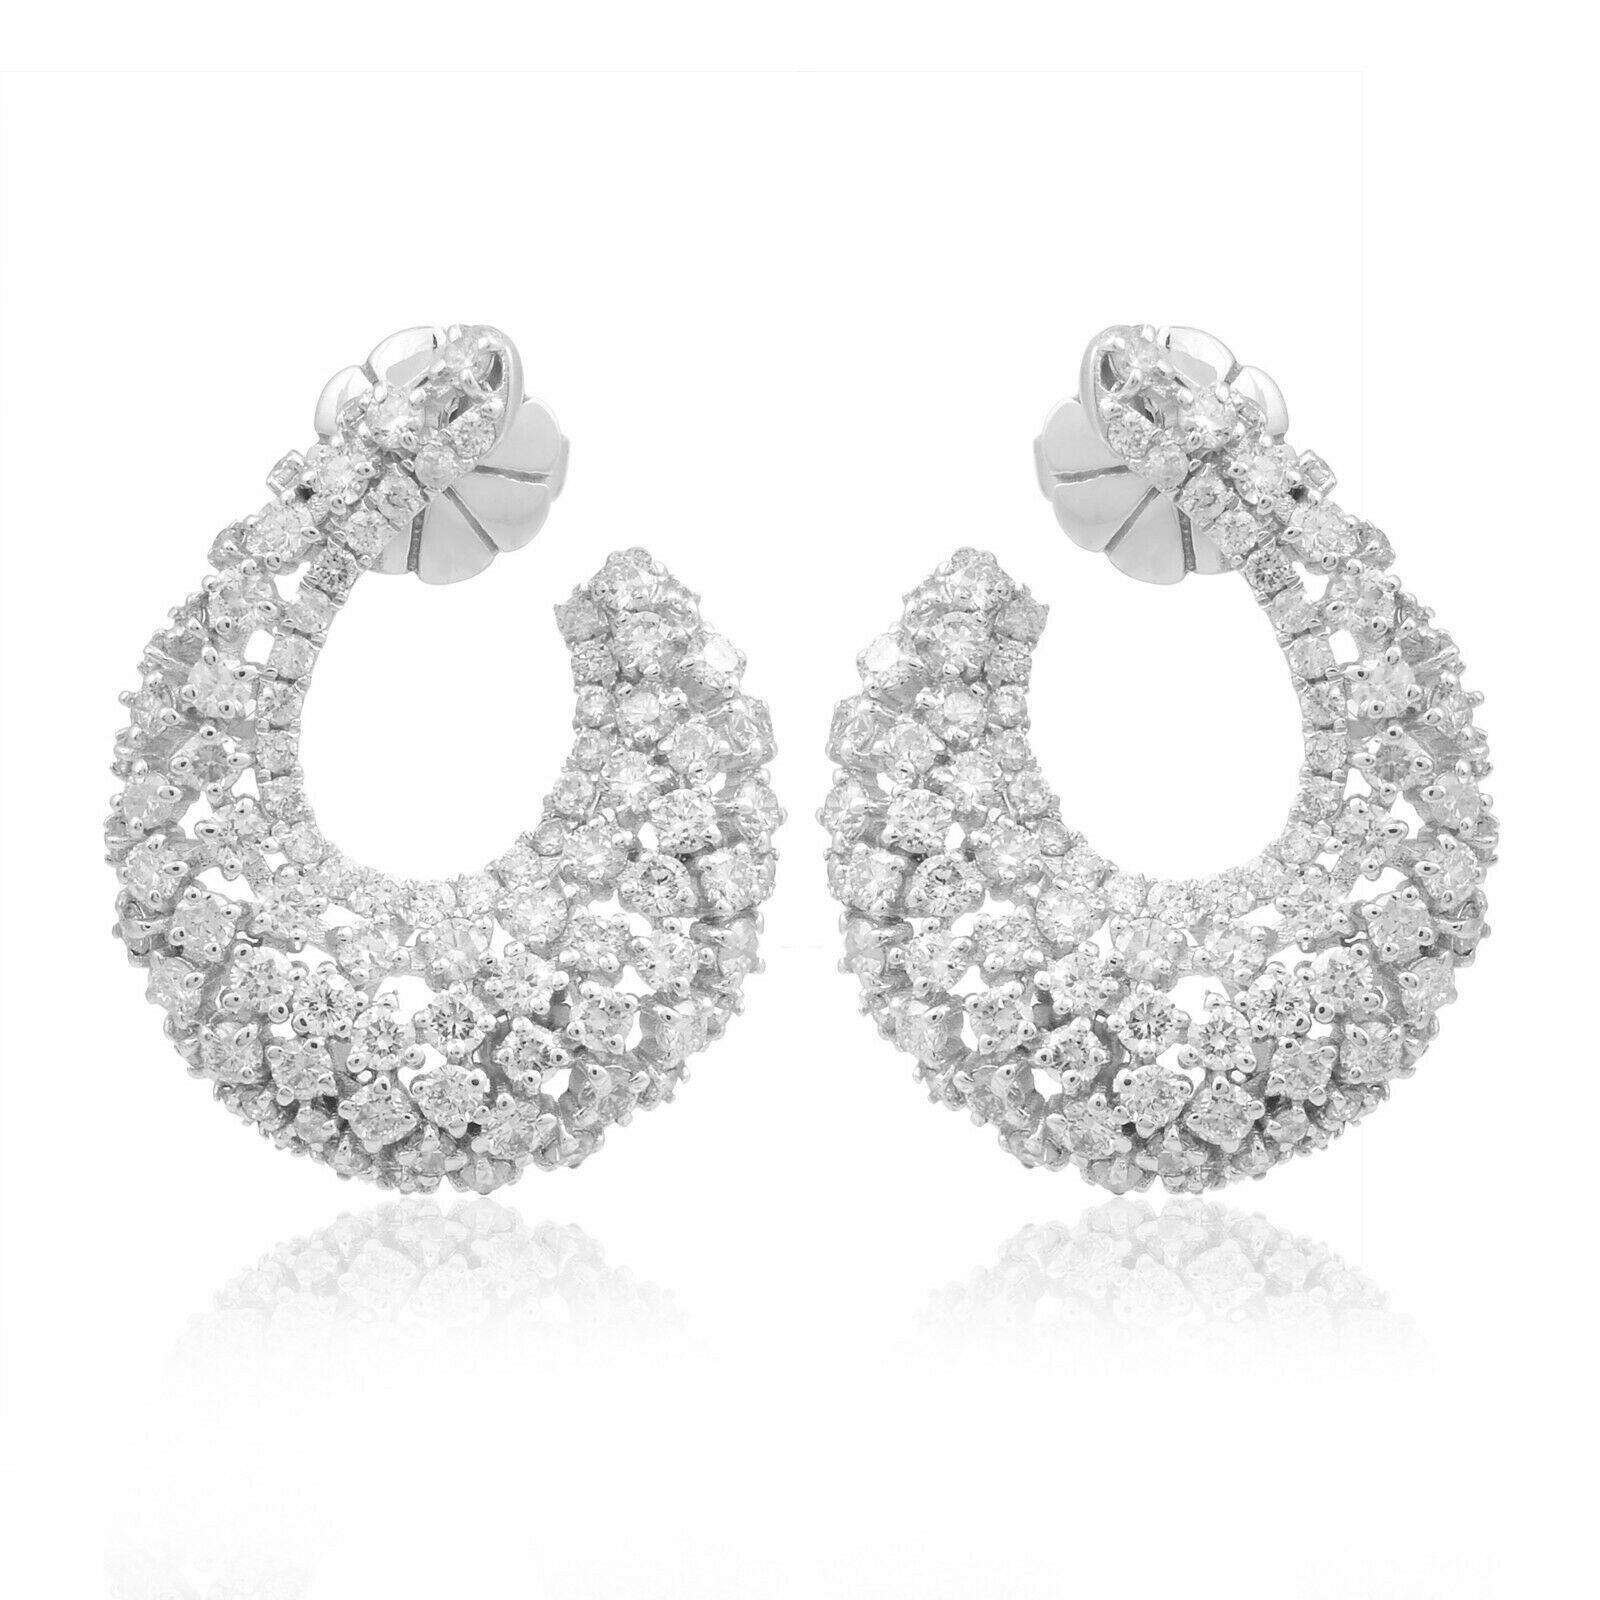 Mixed Cut 2.40 Carat Diamond 18 Karat White Gold Earrings For Sale